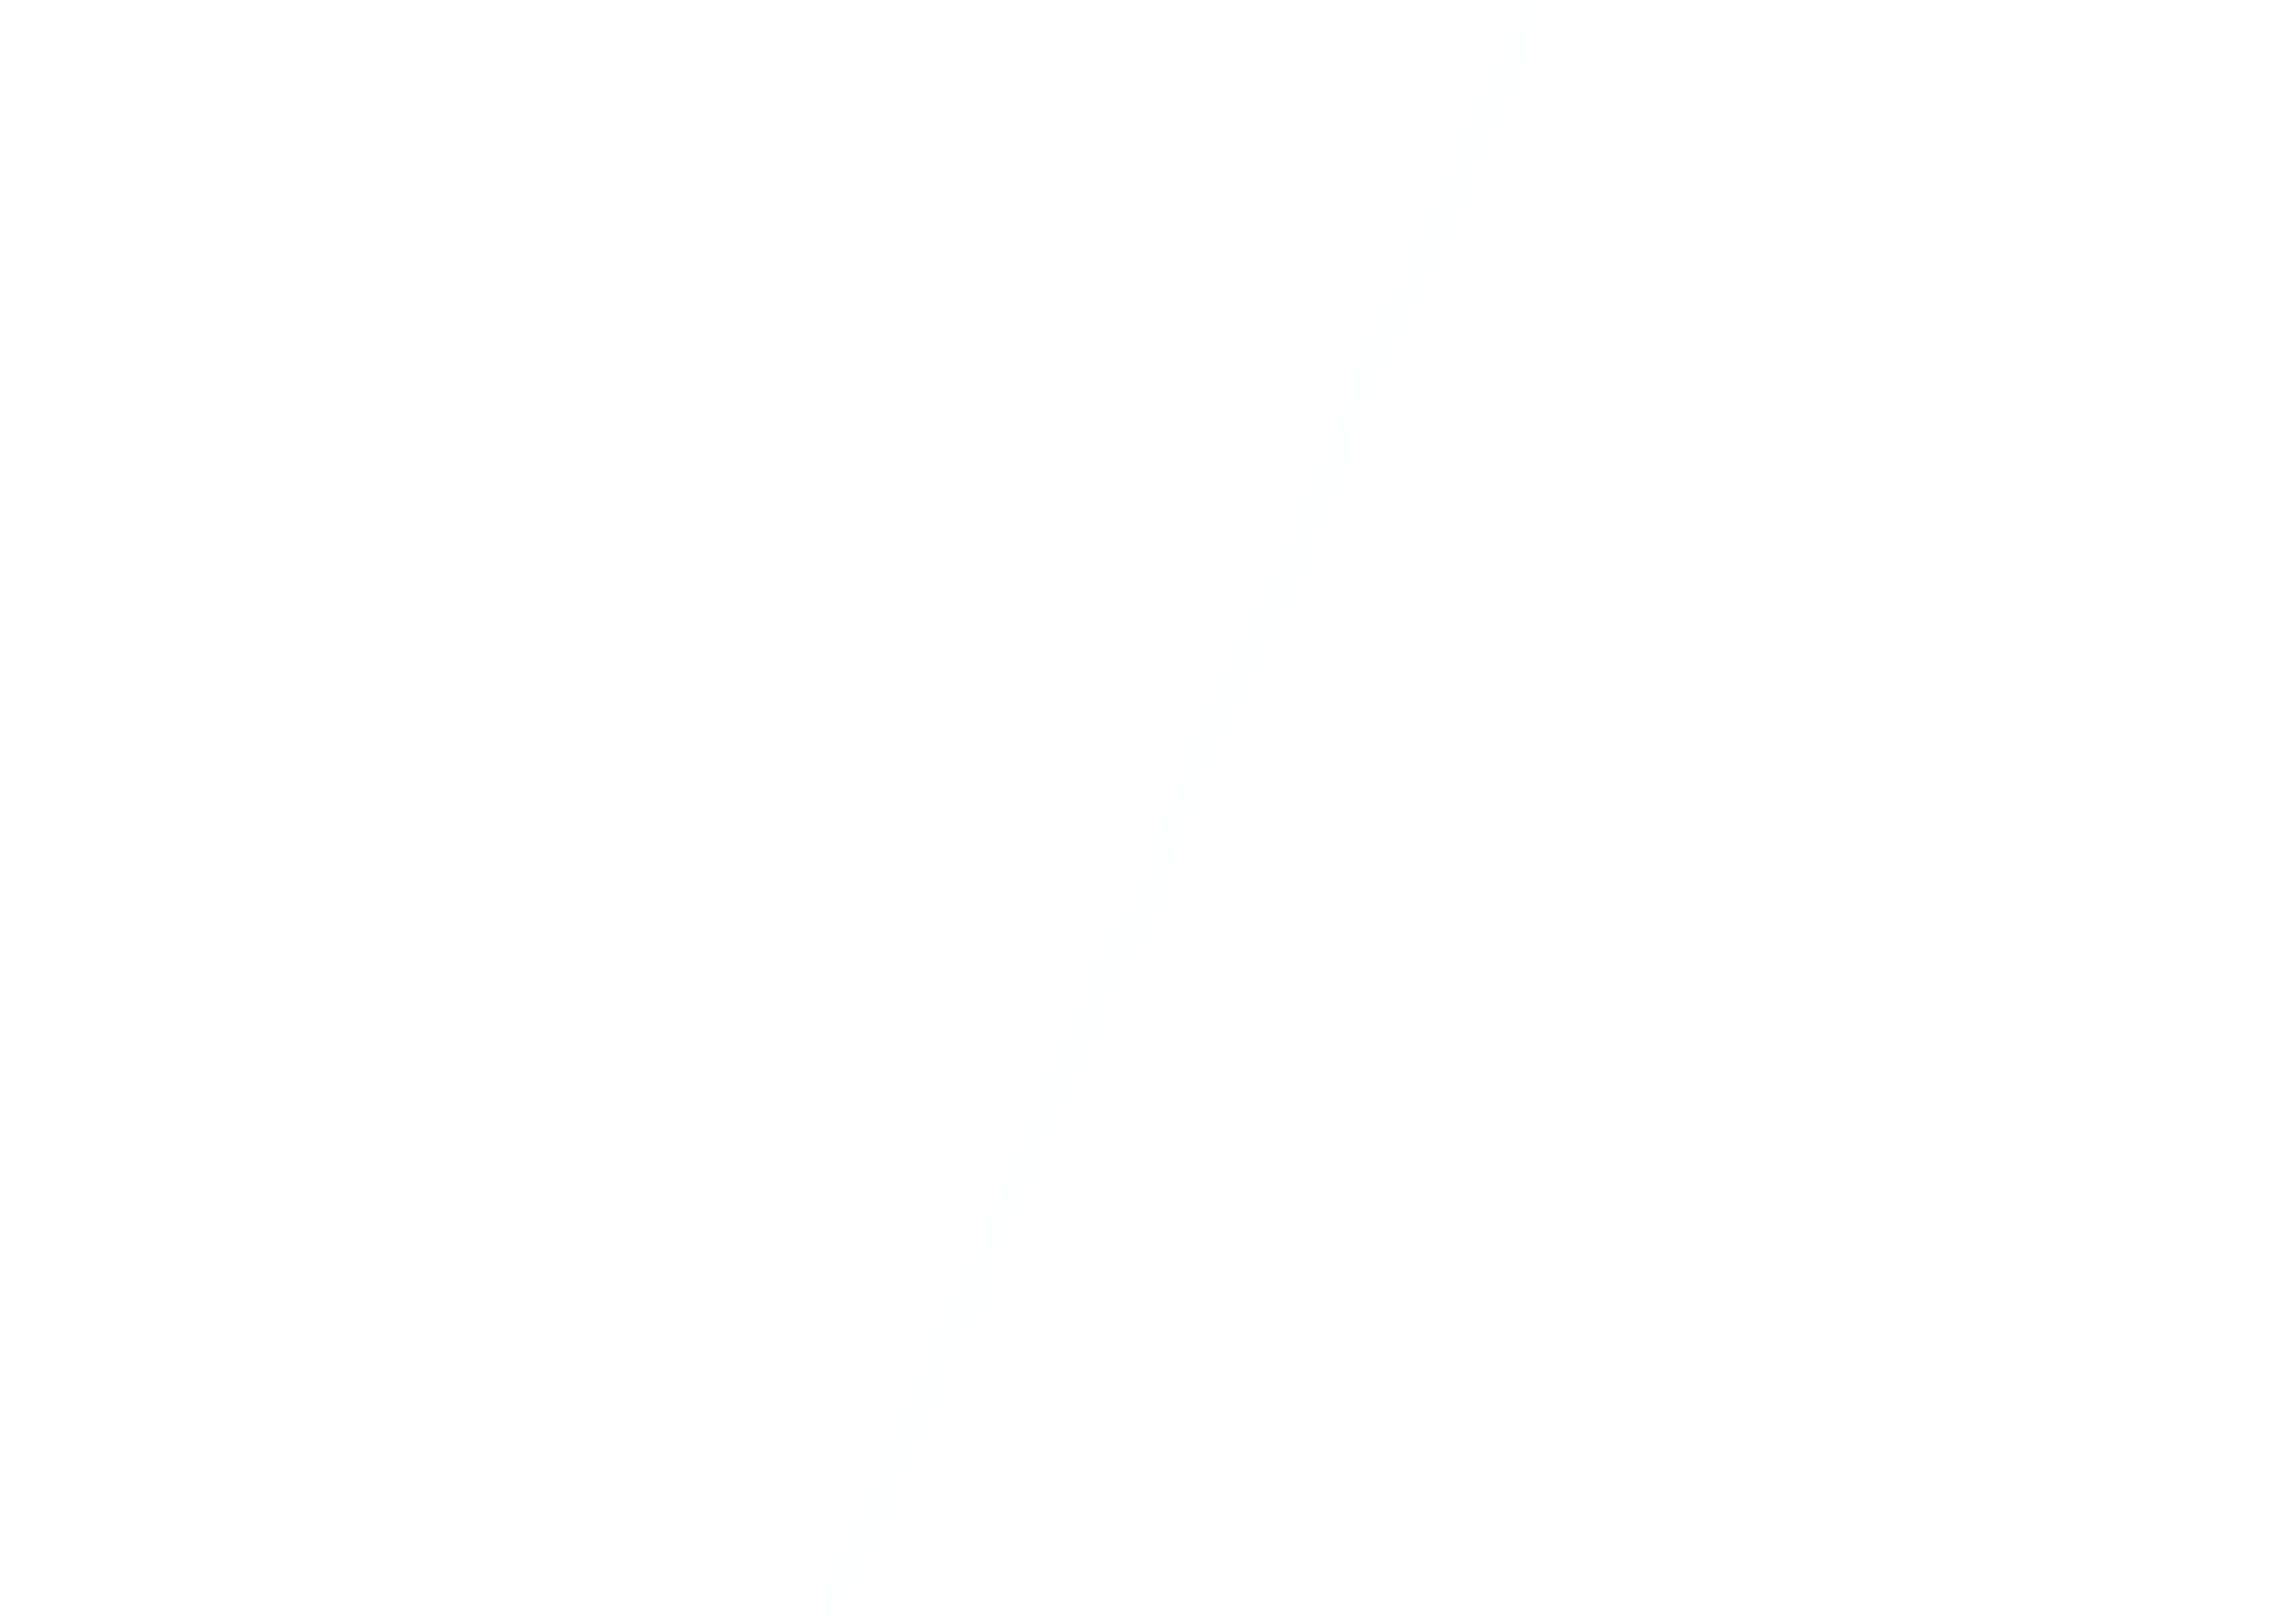 Malak Bellajdel